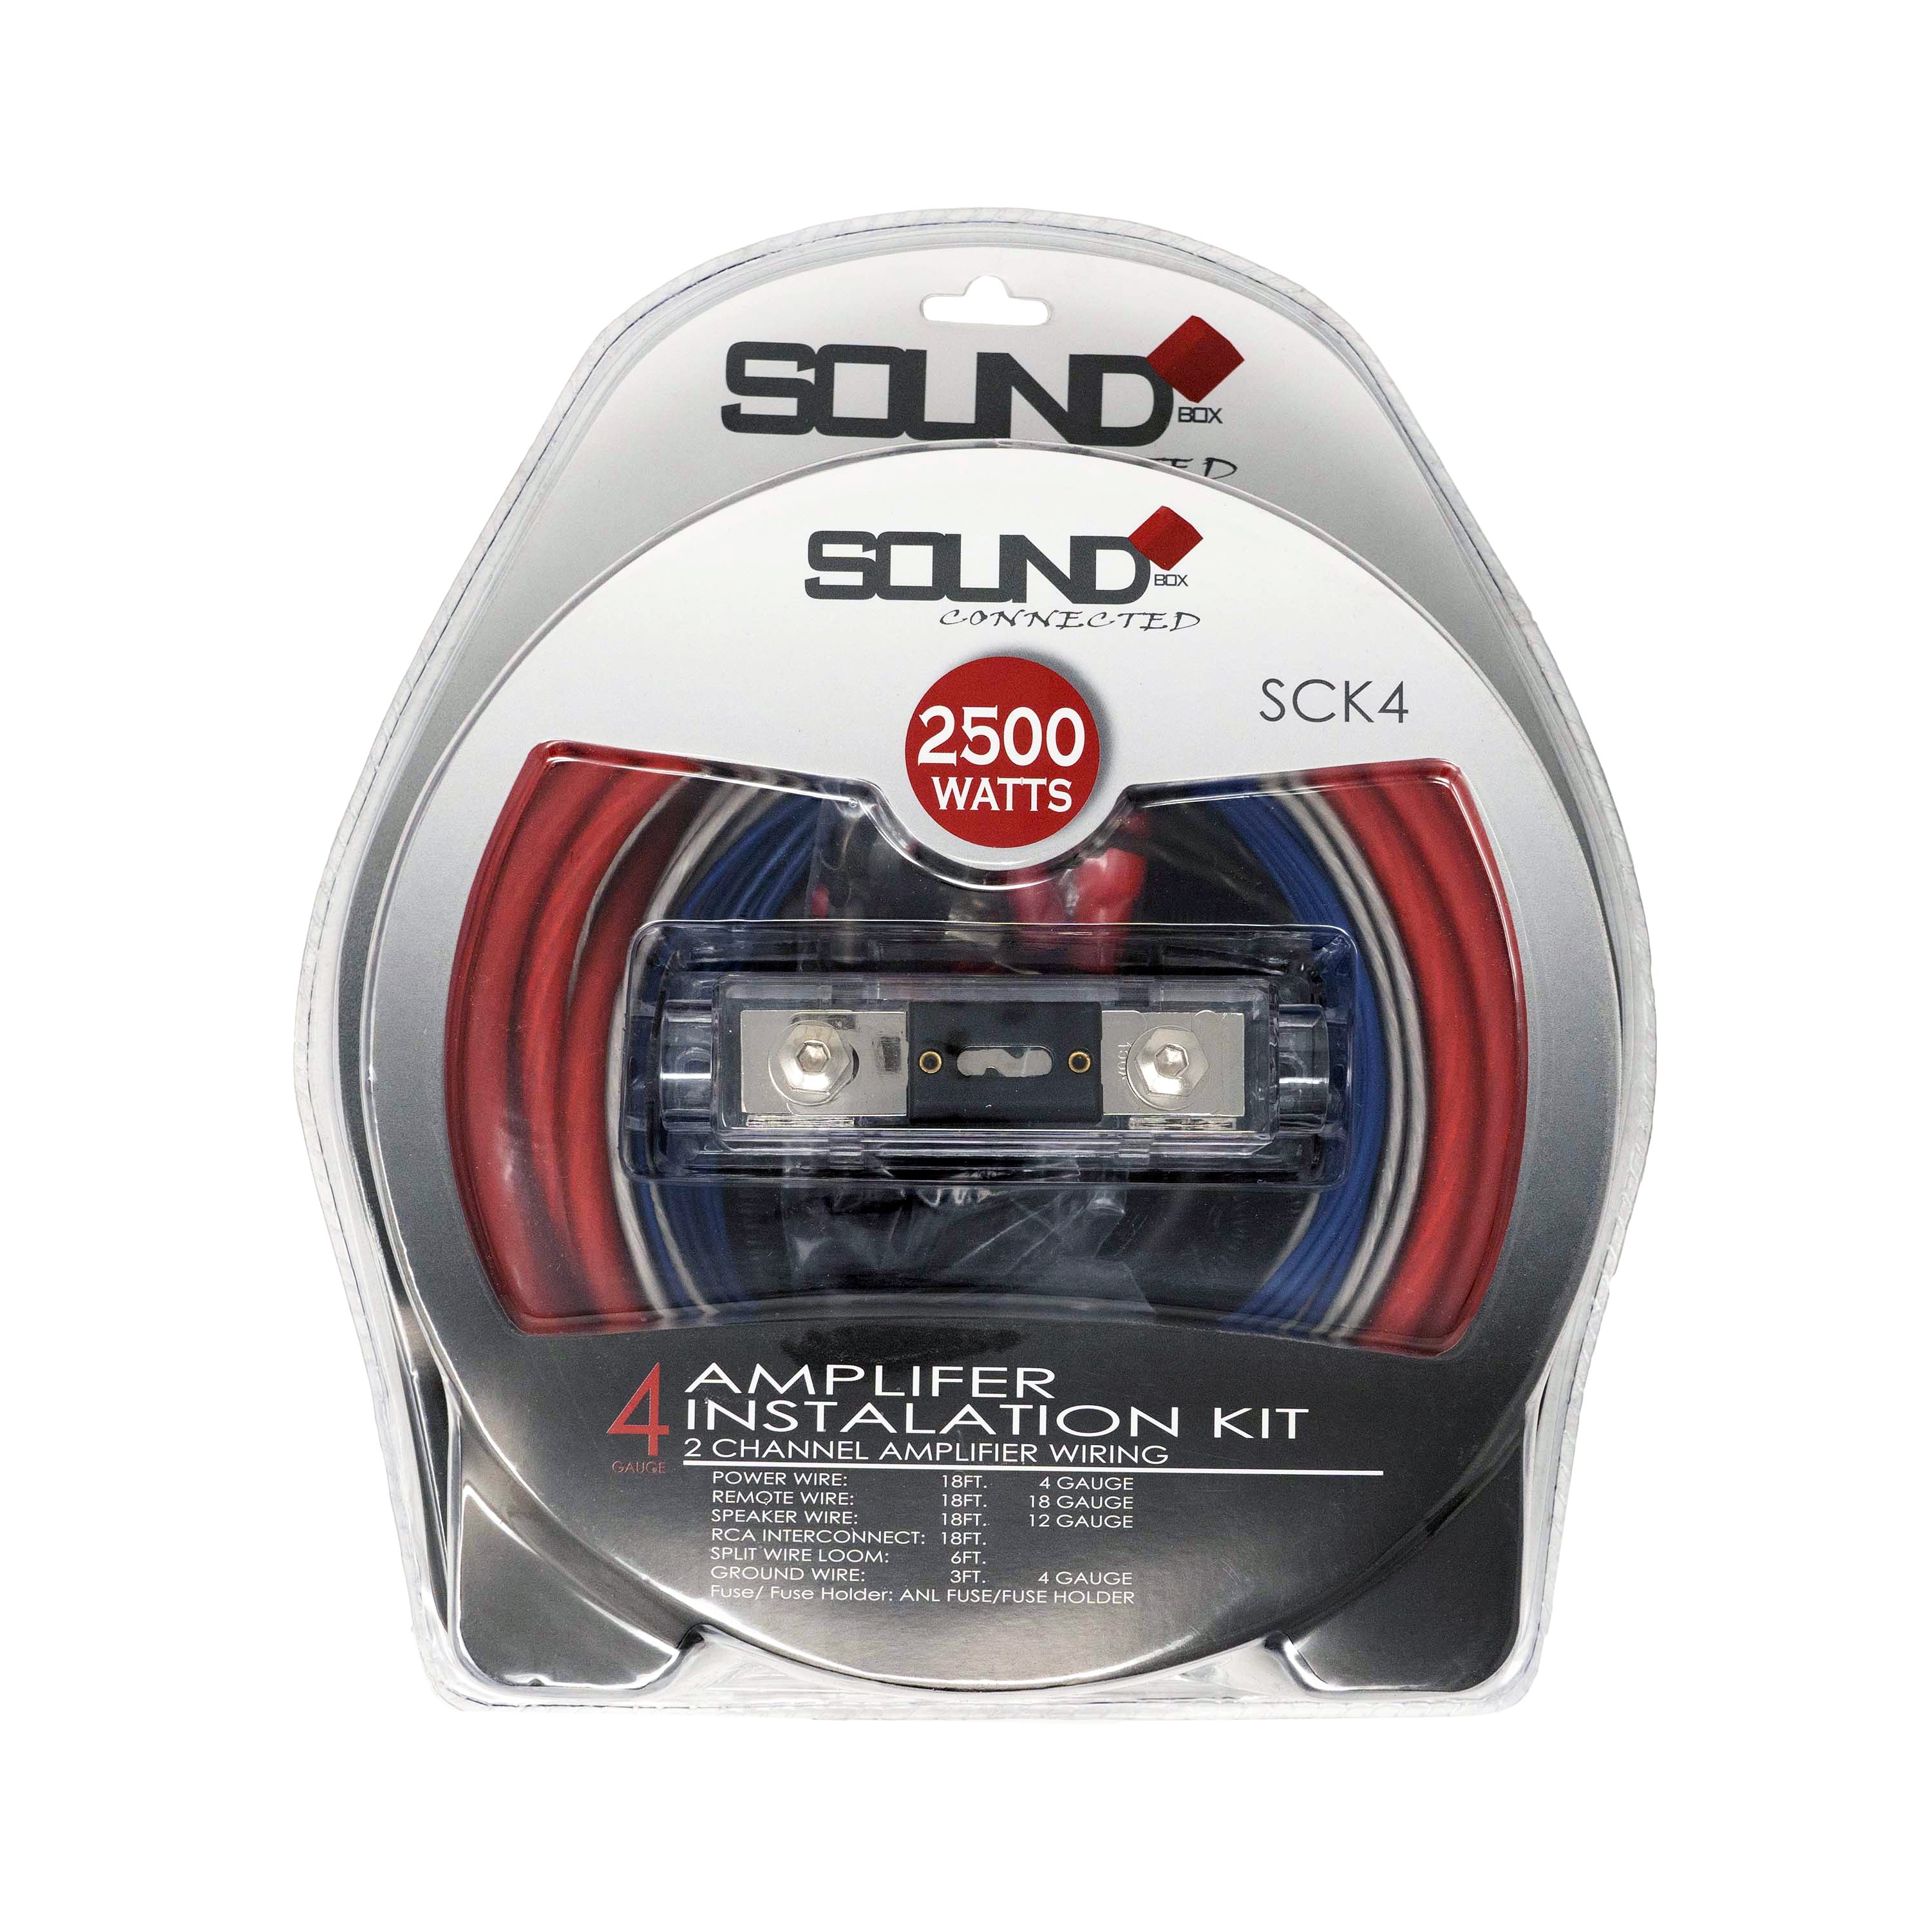 SoundBox SCK4, 4 Gauge Complete Amplifier Install Amp Wiring Kit